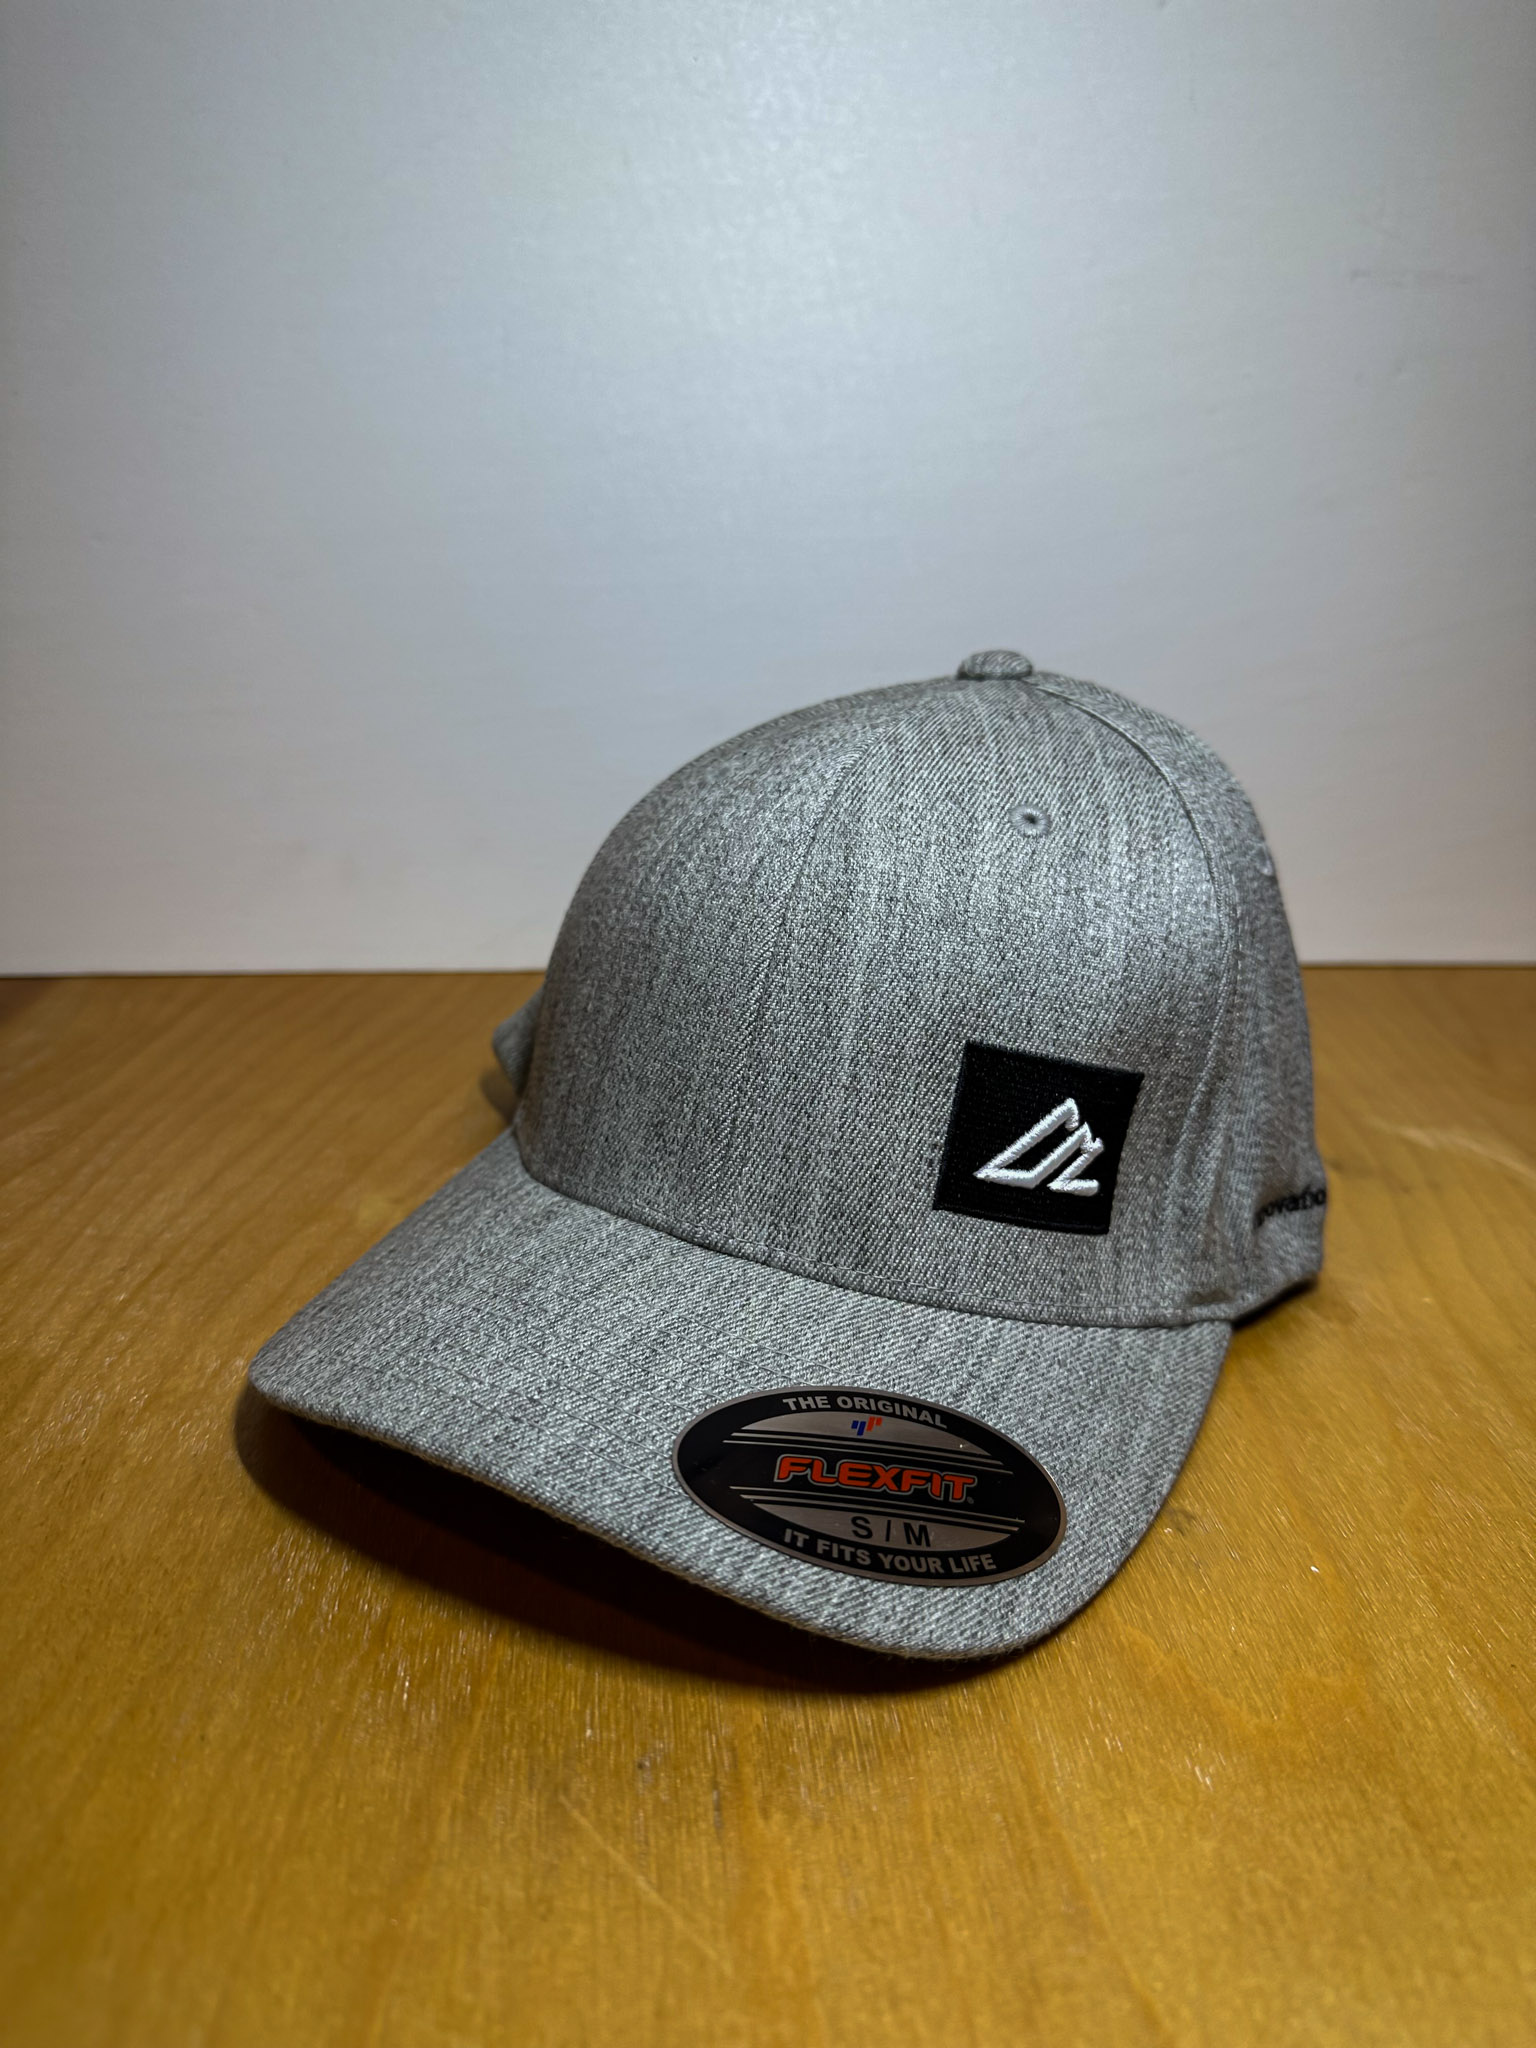 AAL FlexFit Original Hat - Gray/Black Logo - American Adventure Lab